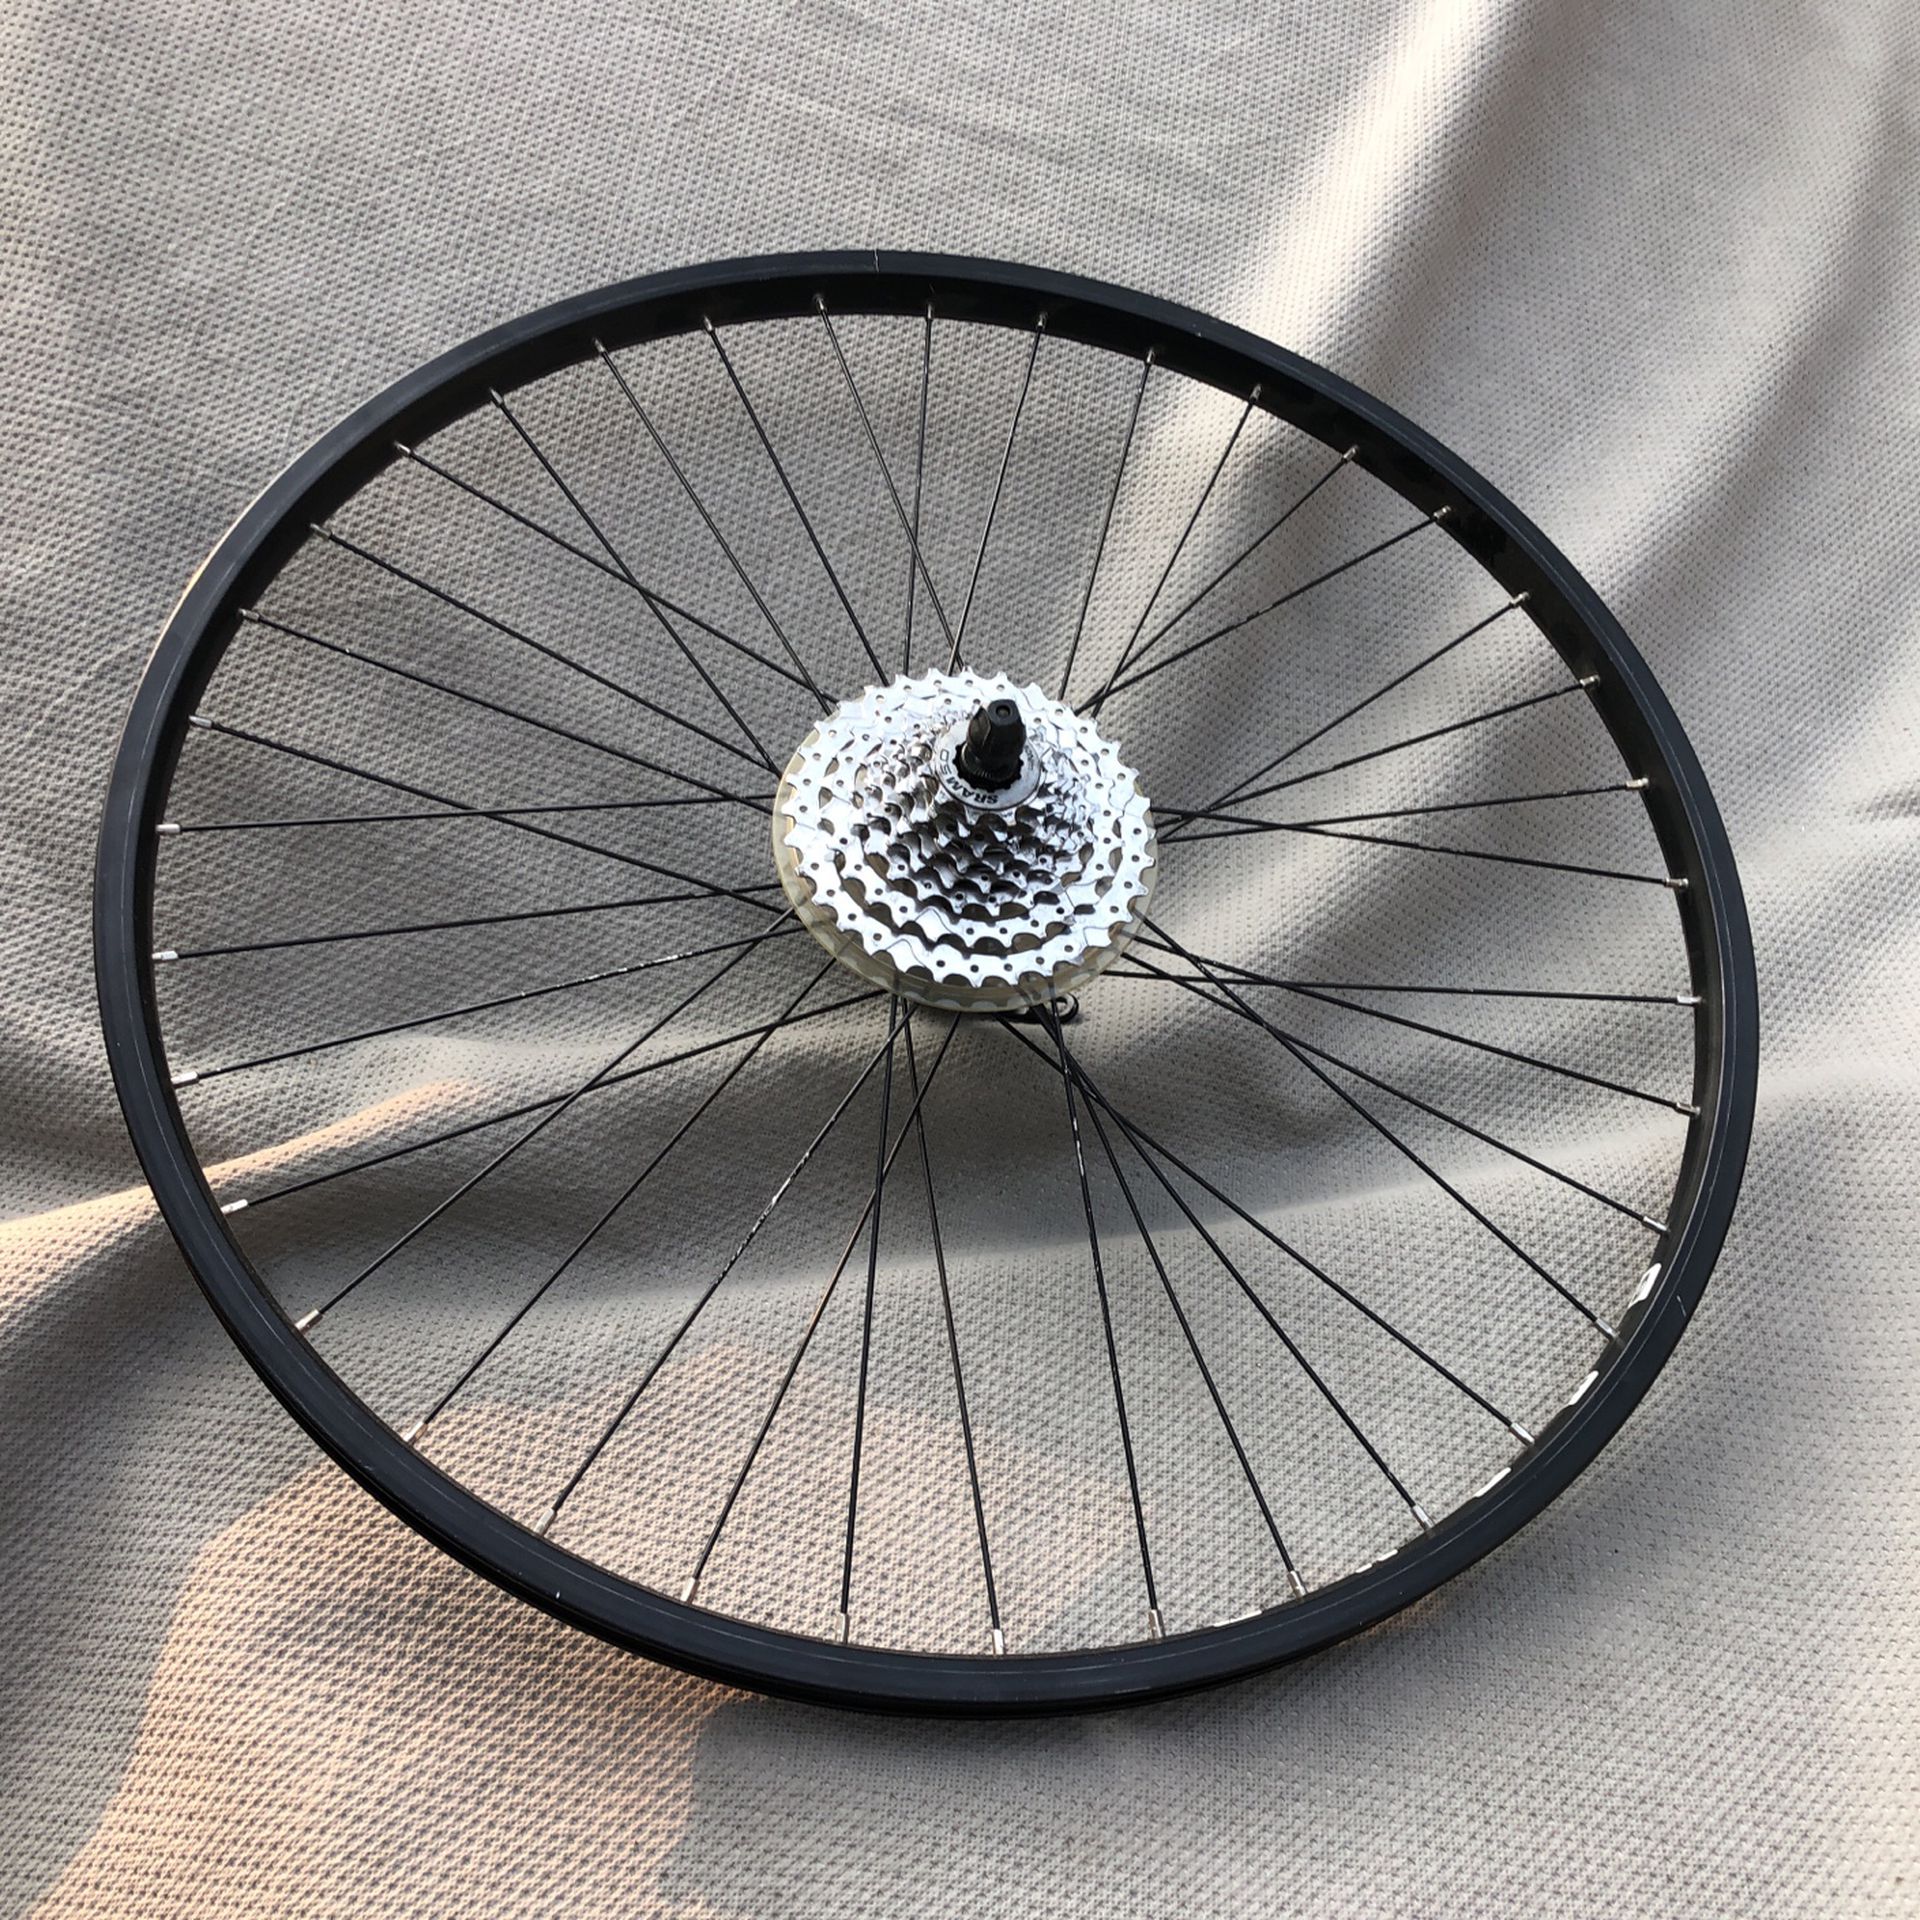 Perfect 26 inch mountain bike wheel